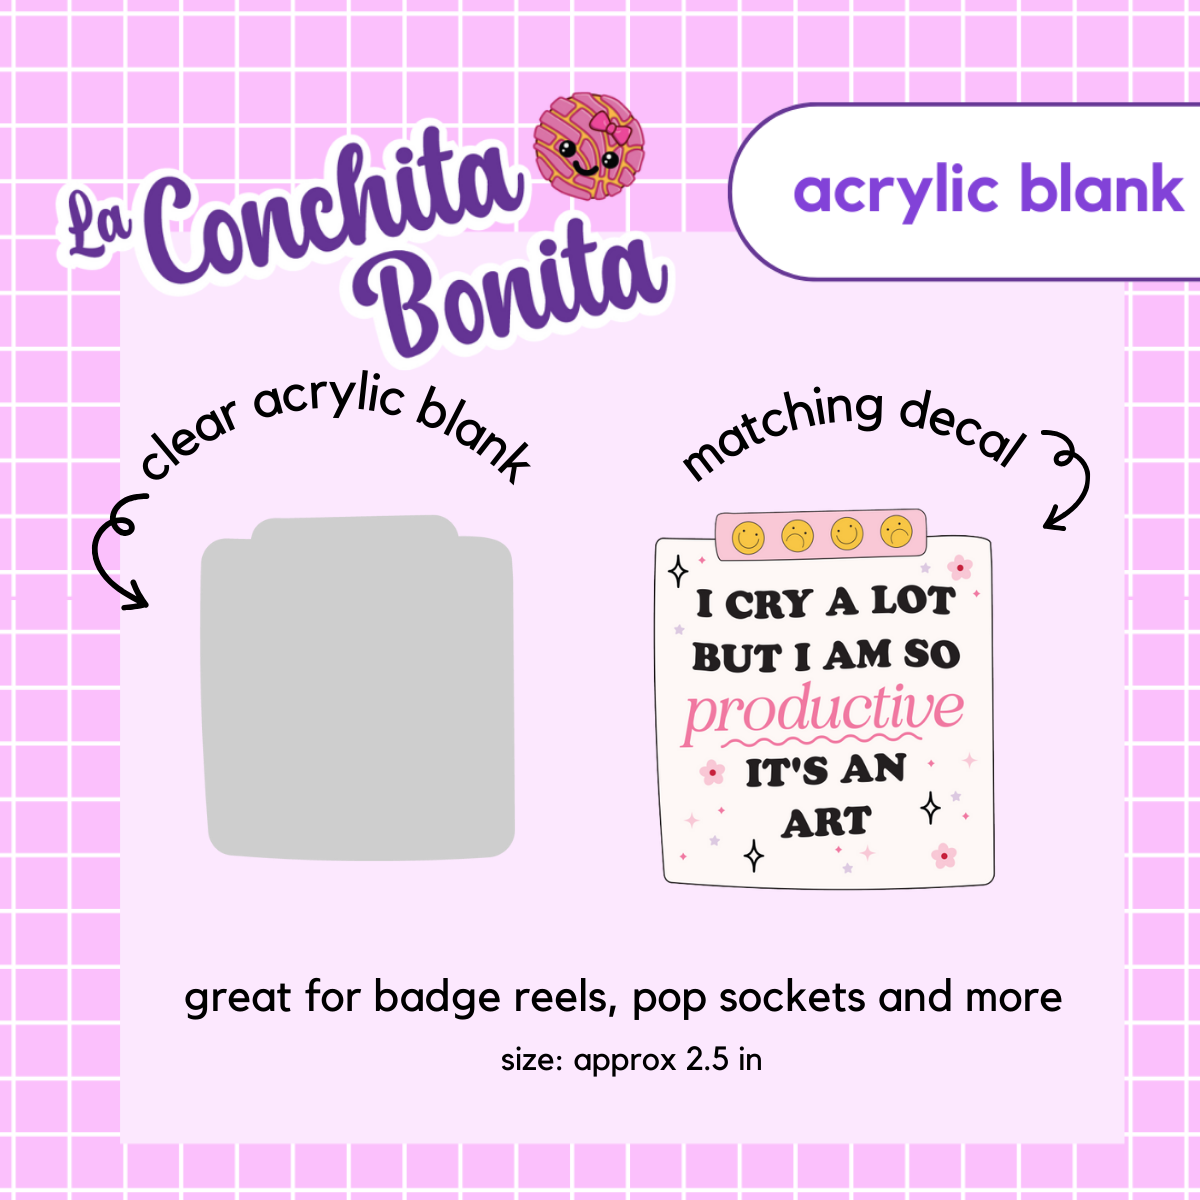 Acrylic Blank - I Cry A Lot Badge